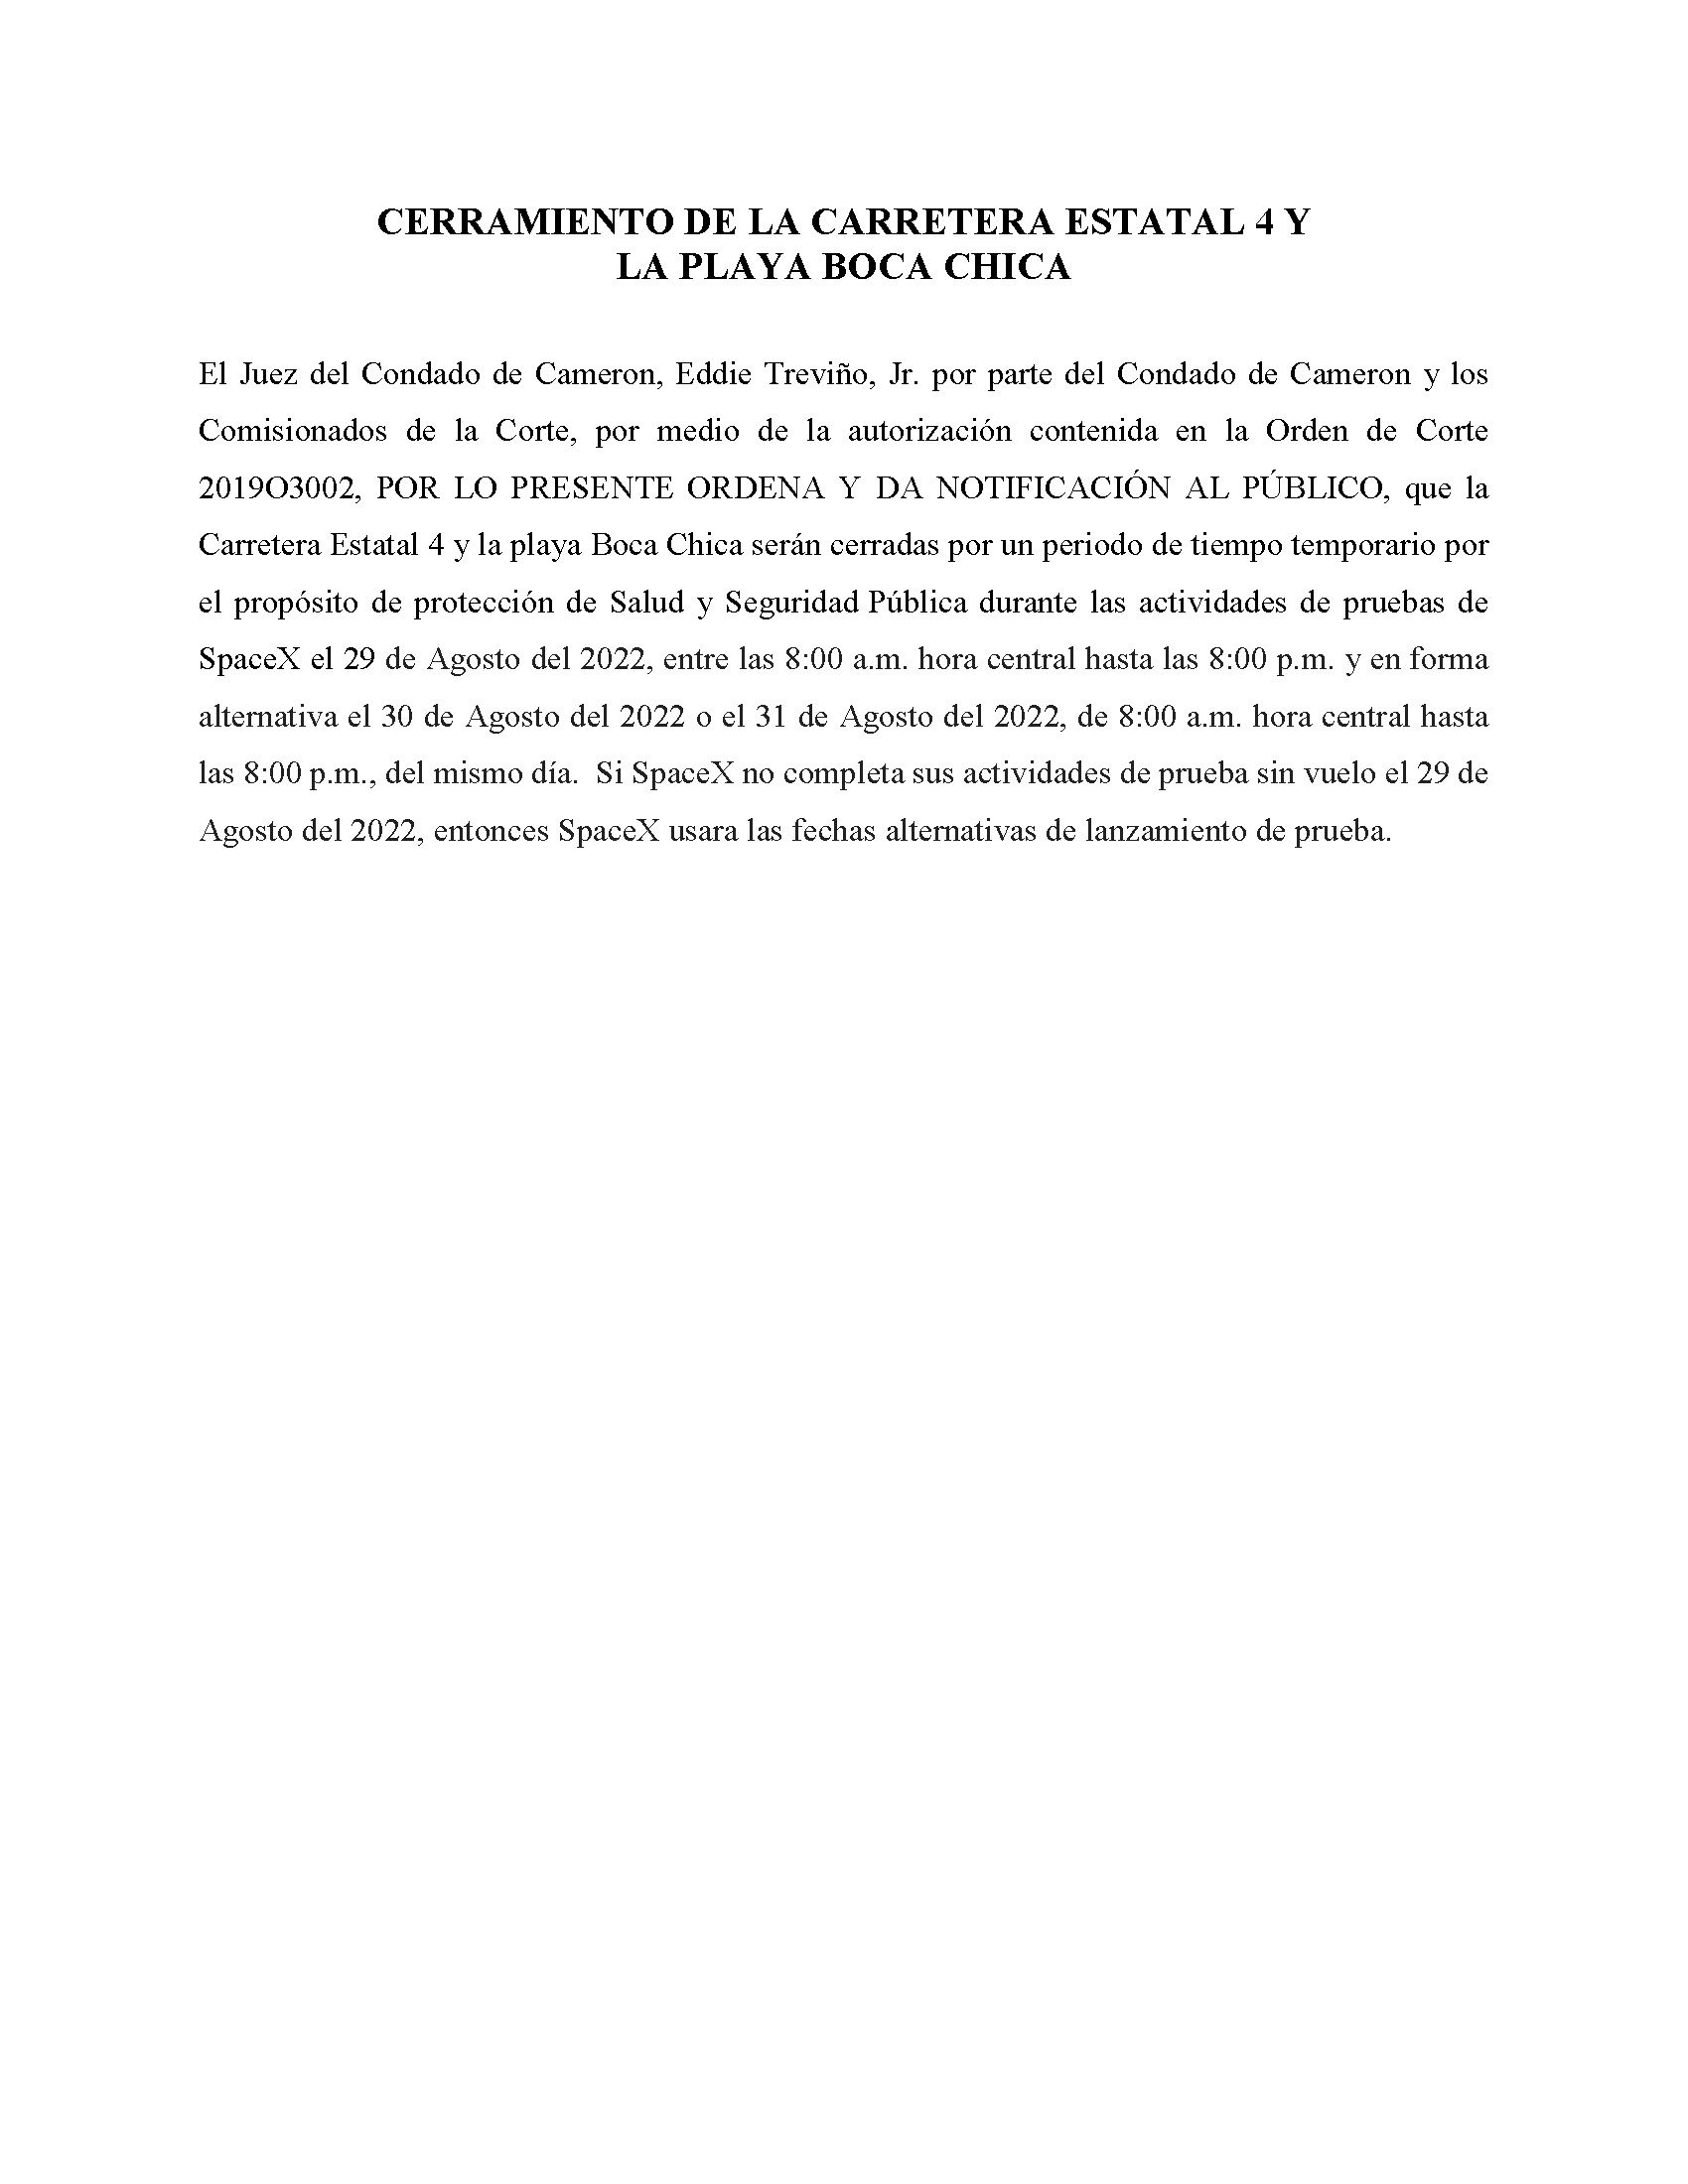 ORDER.CLOSURE OF HIGHWAY 4 Y LA PLAYA BOCA CHICA.SPANISH.08.29.2022